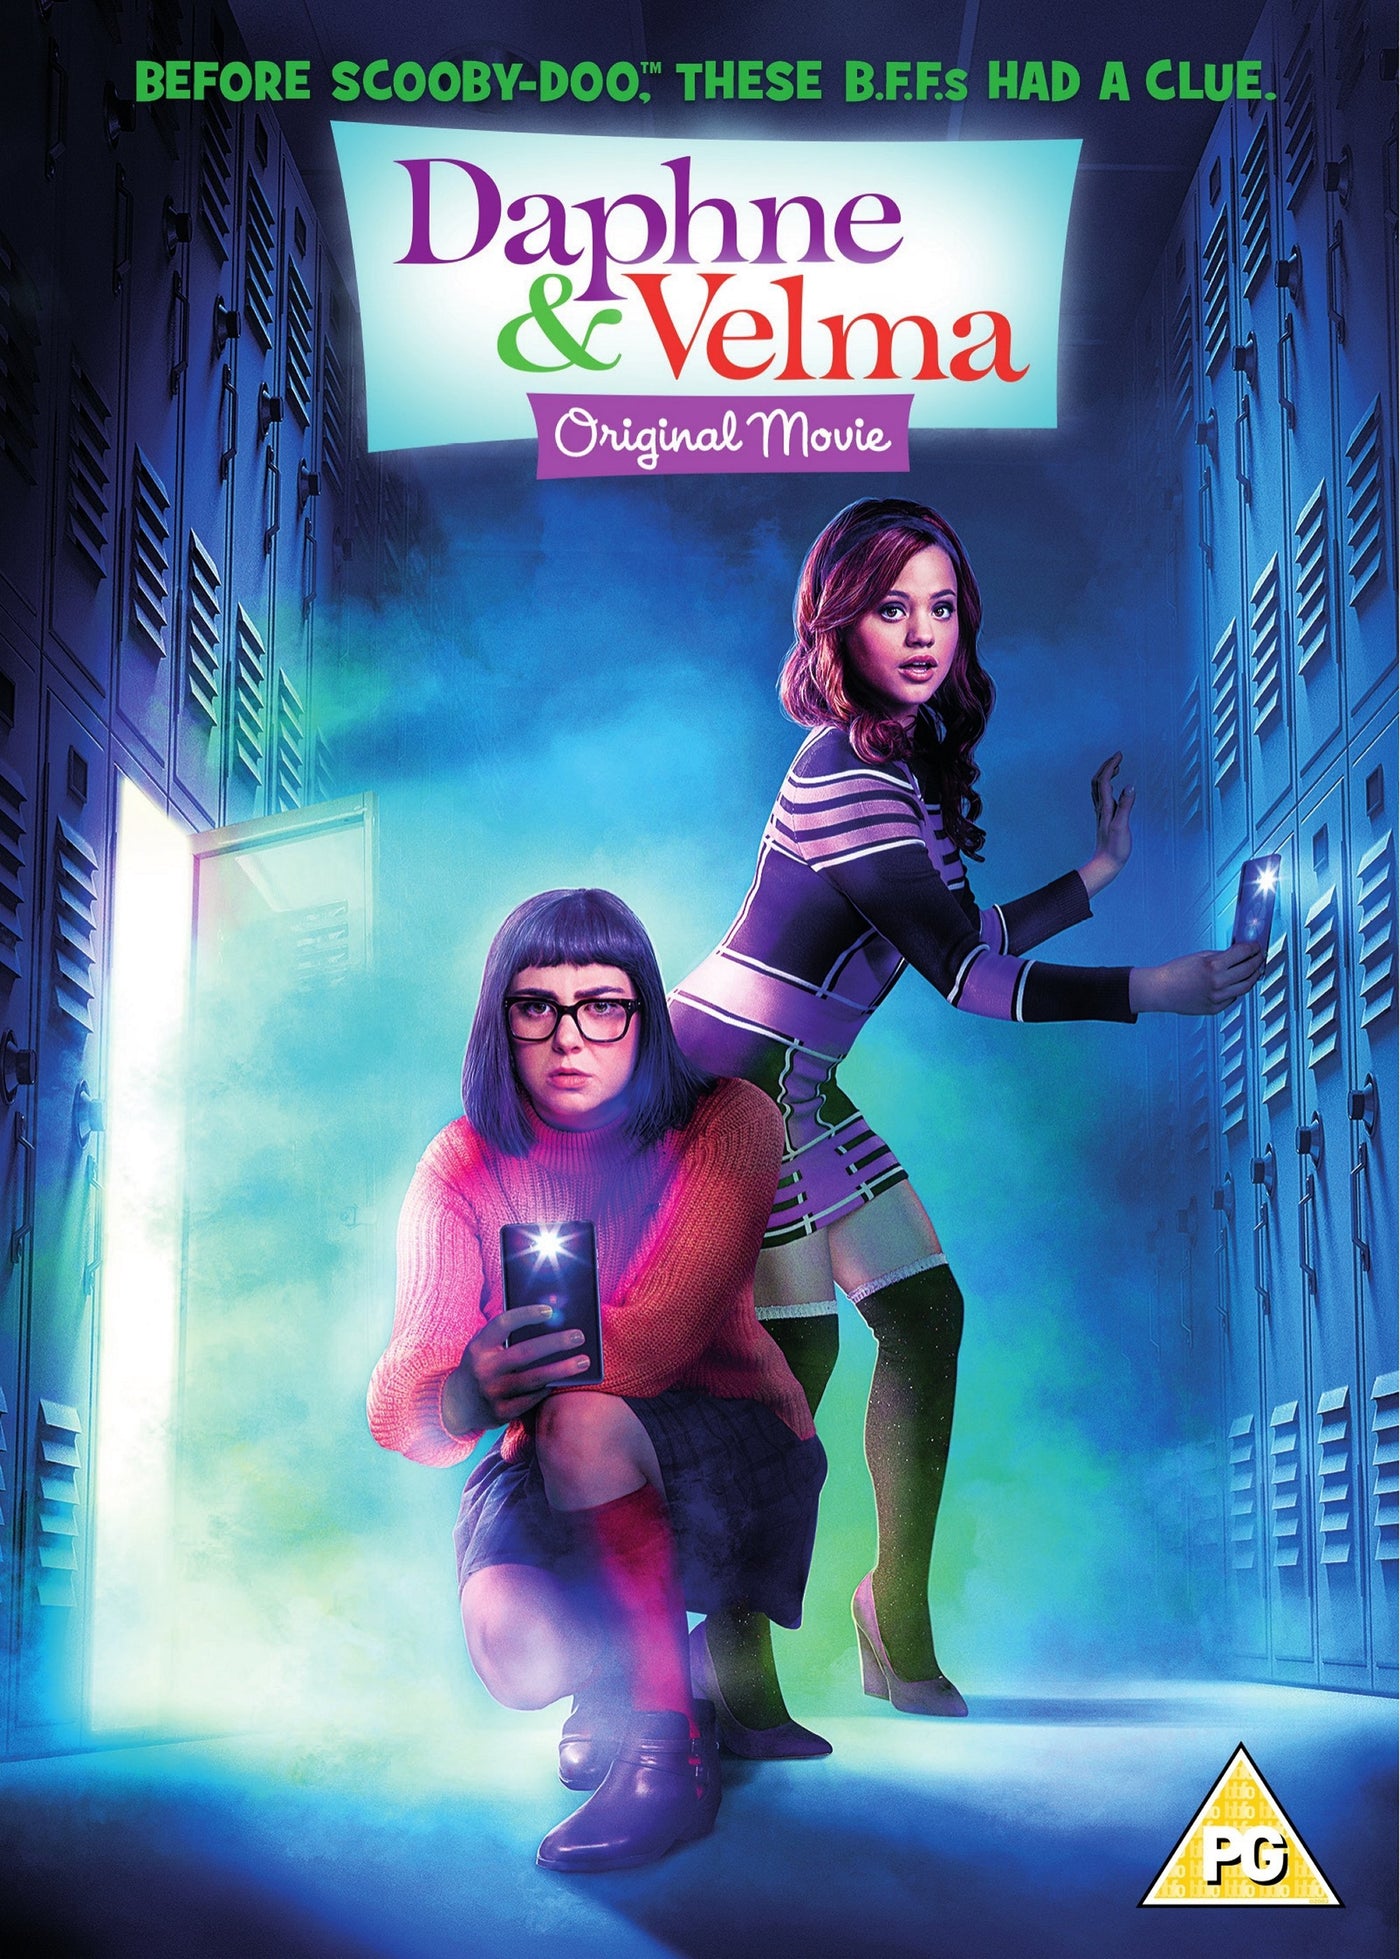 Daphne & Velma (DVD)